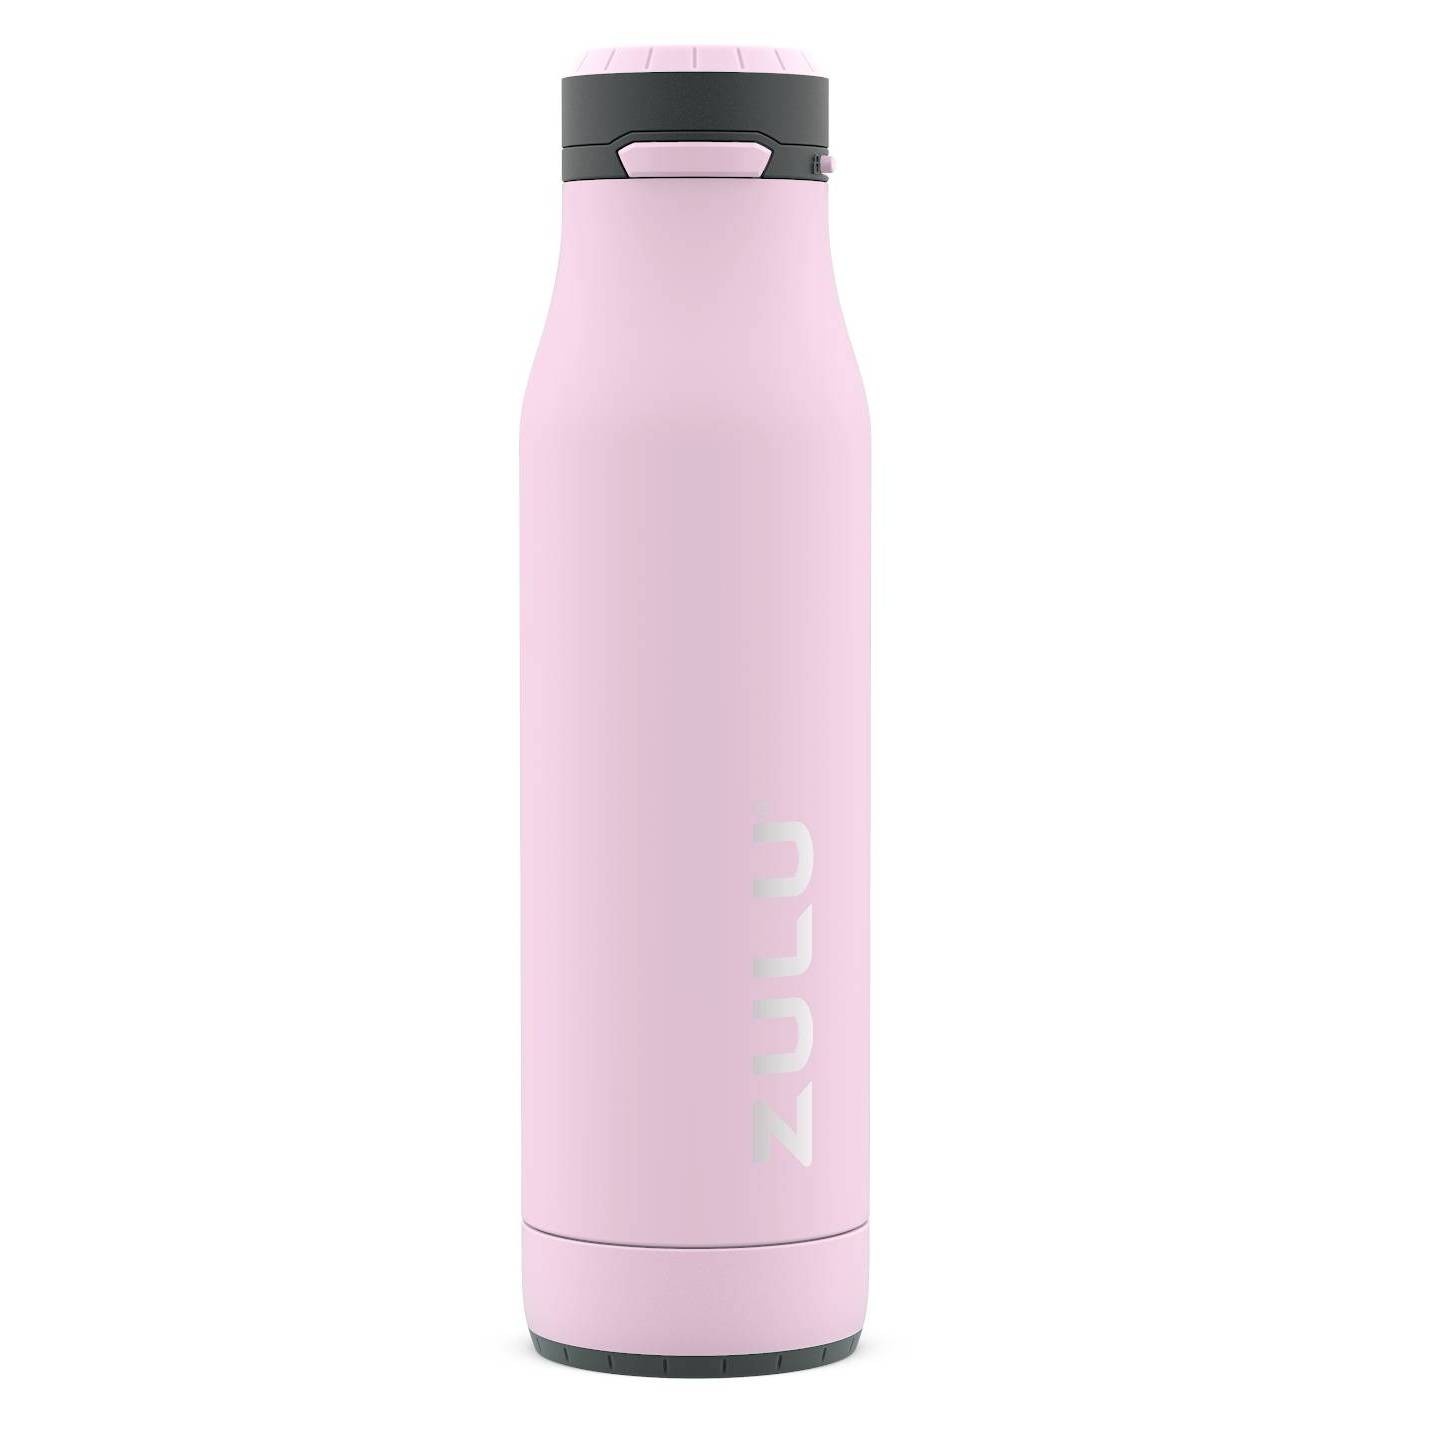 Zulu Ace 24oz Stainless Steel Water Bottle - Pink 1 ct